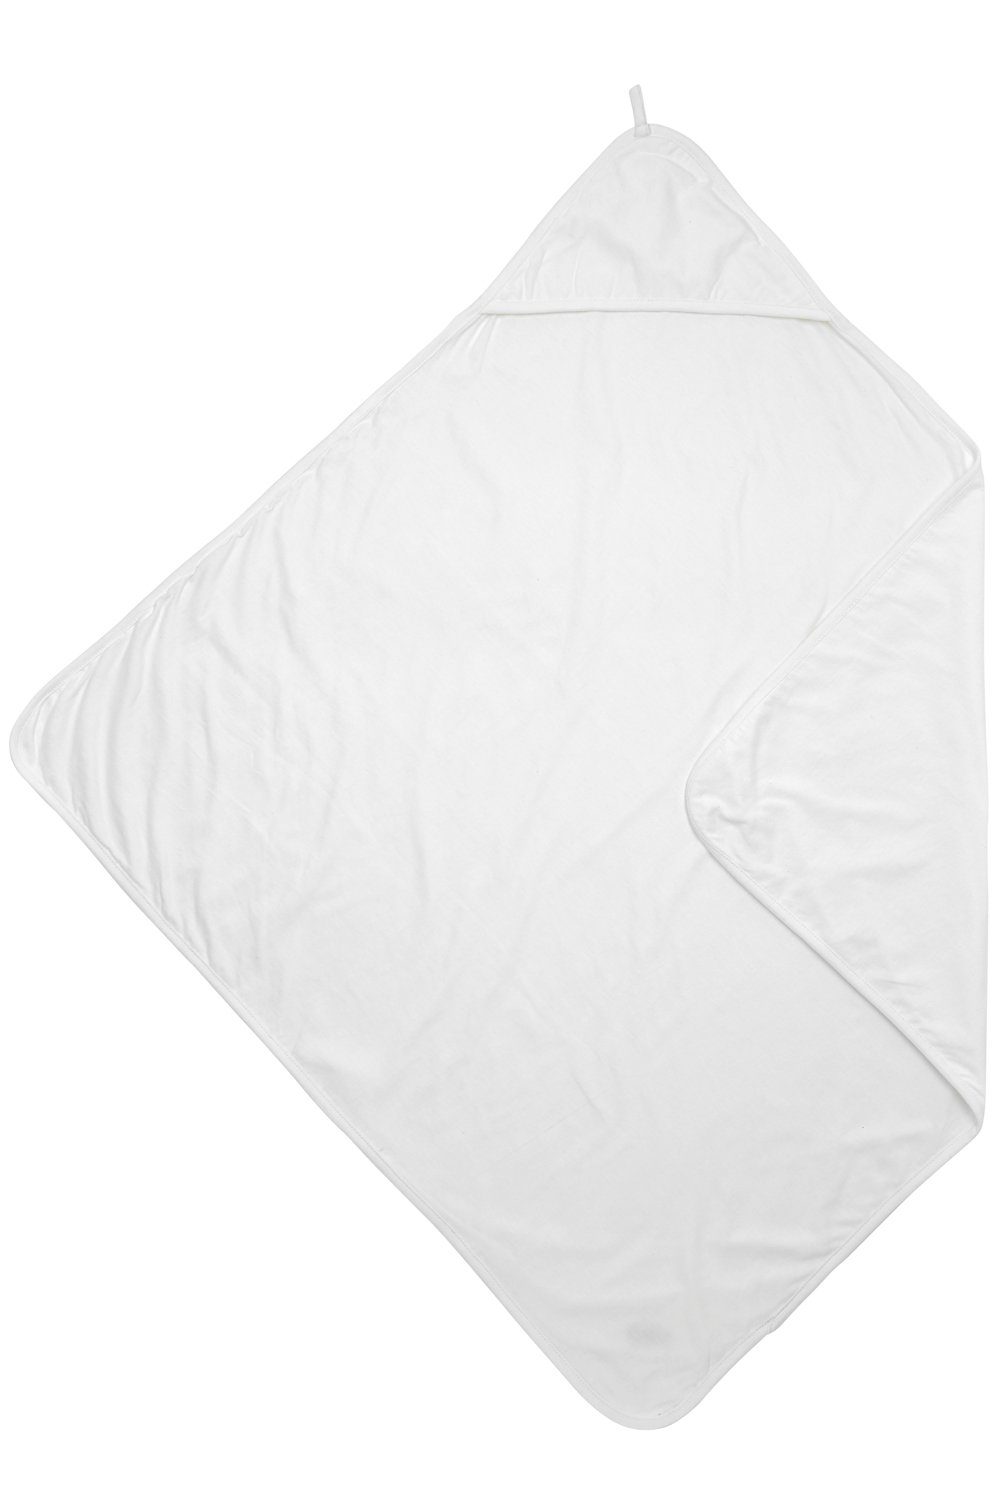 Kapuzenhandtuch Baby Uni (1-St), Meyco Jersey White, 80x80cm